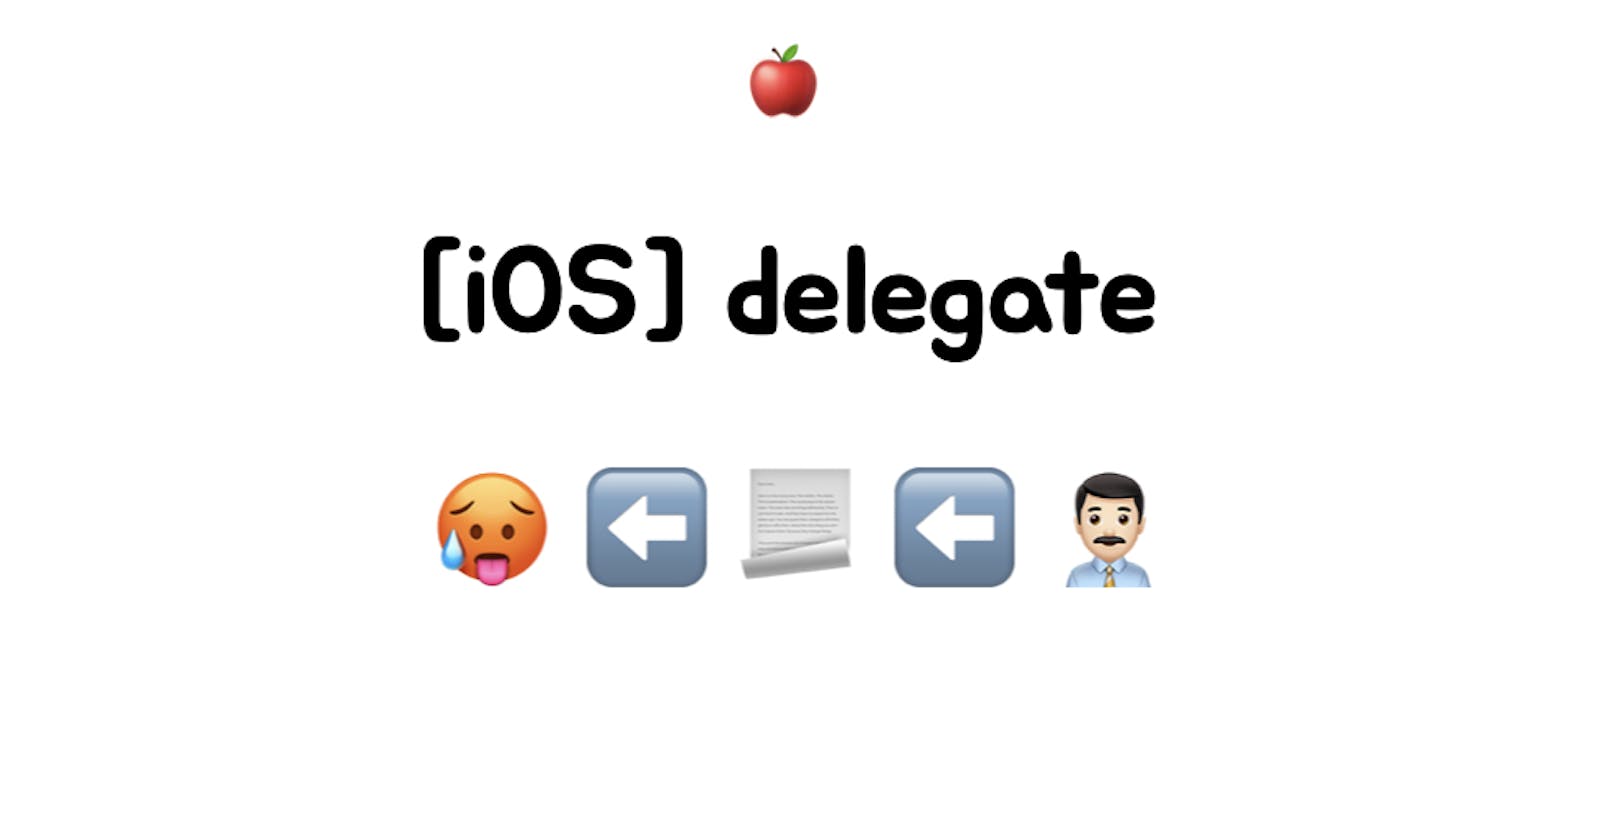 [iOS] delegate 구현하기